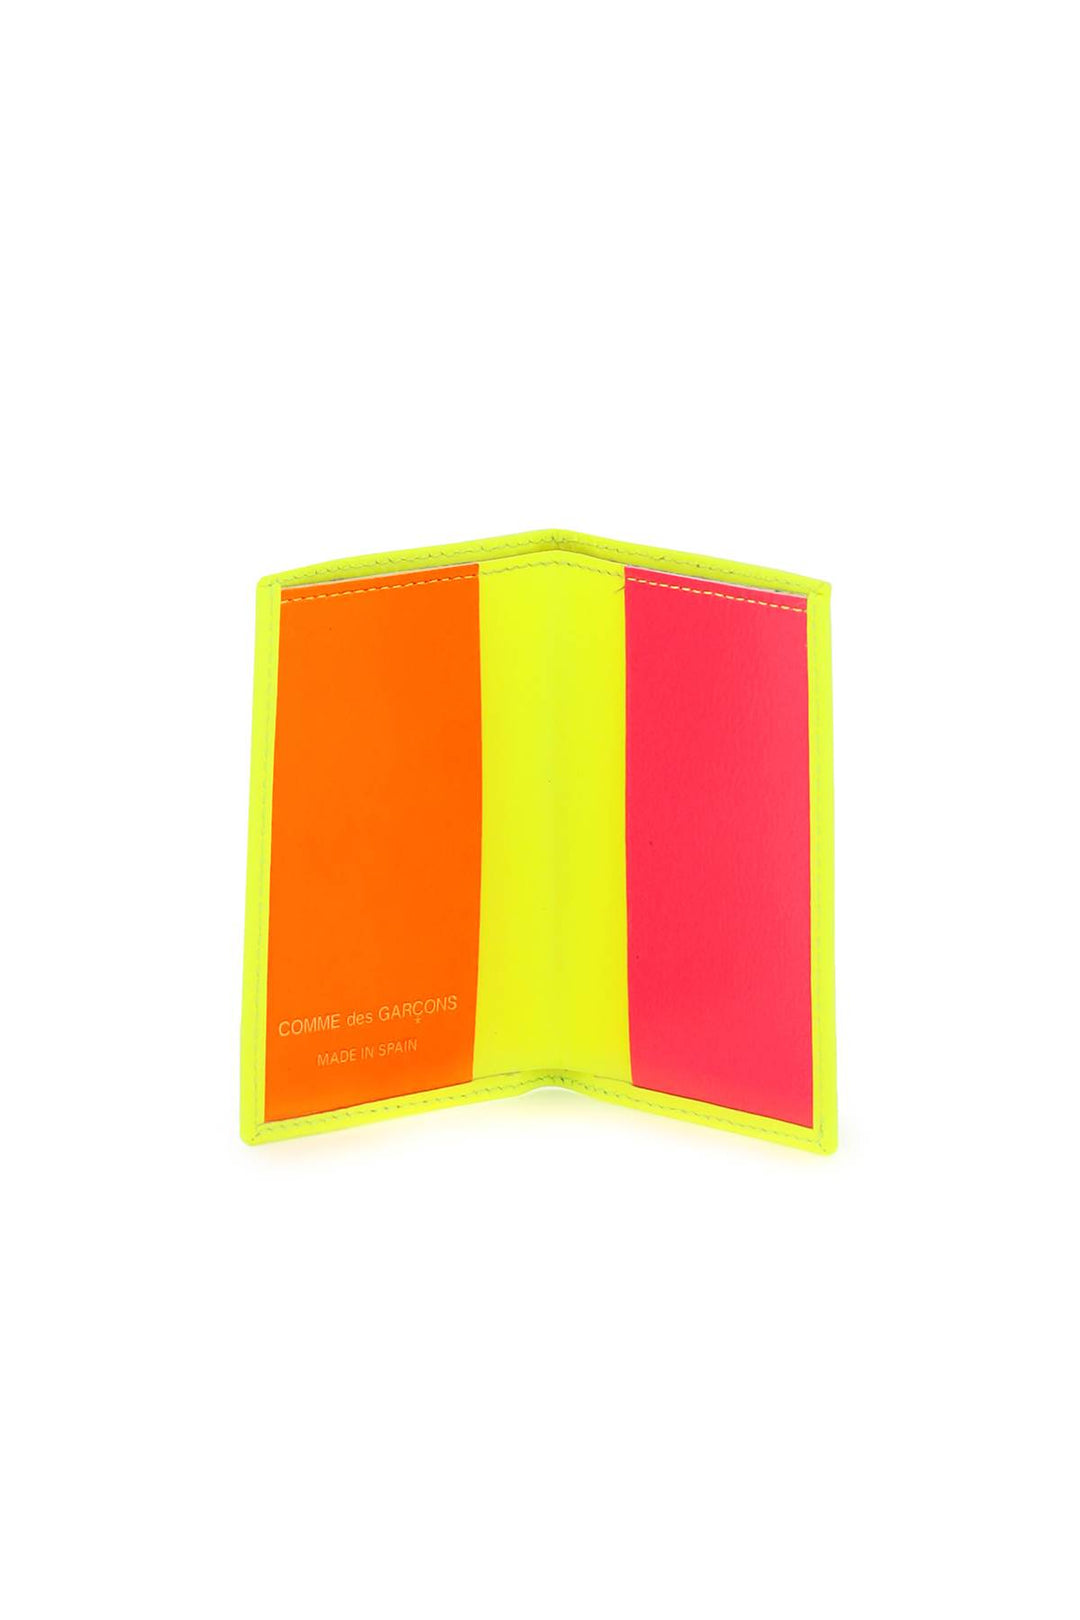 Comme Des Garcons Wallet Super Fluo Bi Fold Wallet   Arancio